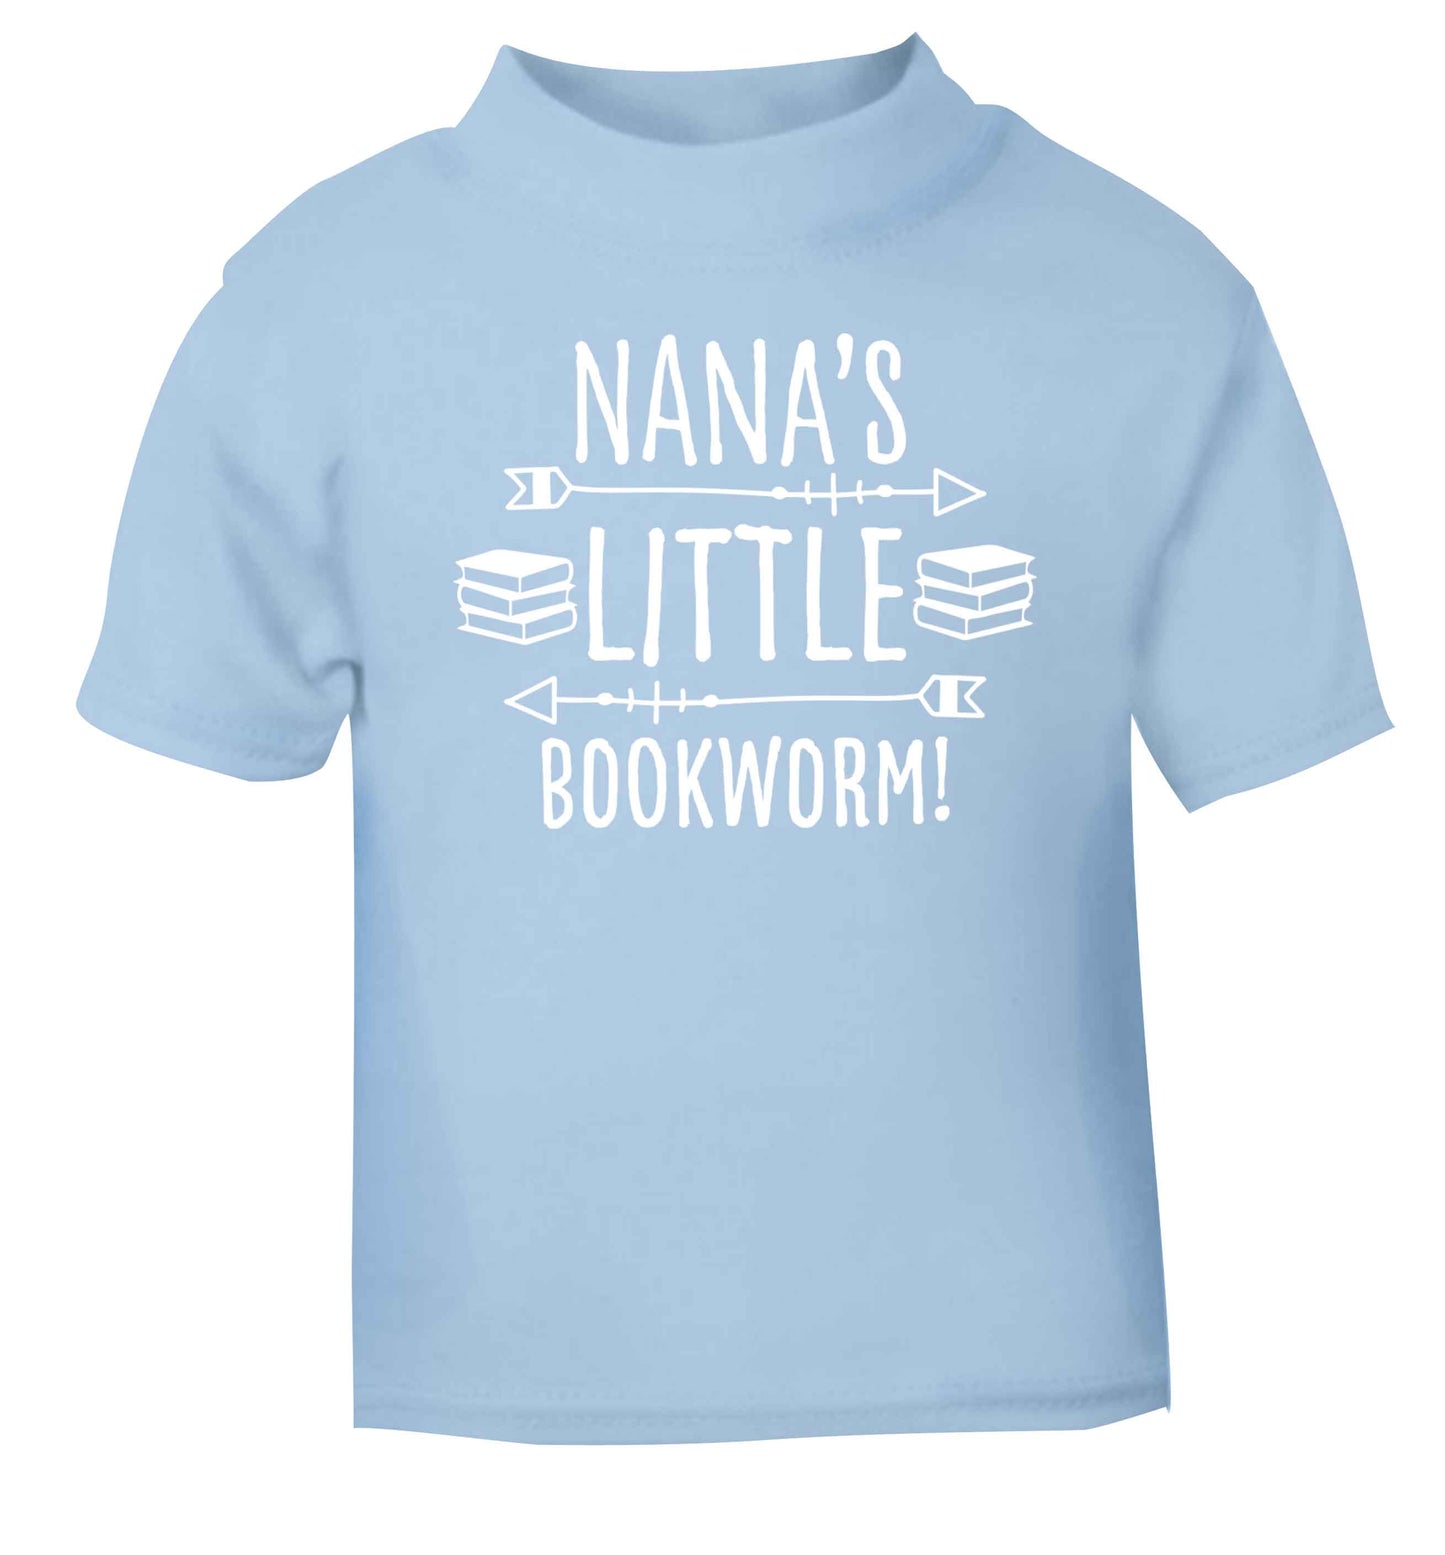 Grandad's little bookworm light blue baby toddler Tshirt 2 Years